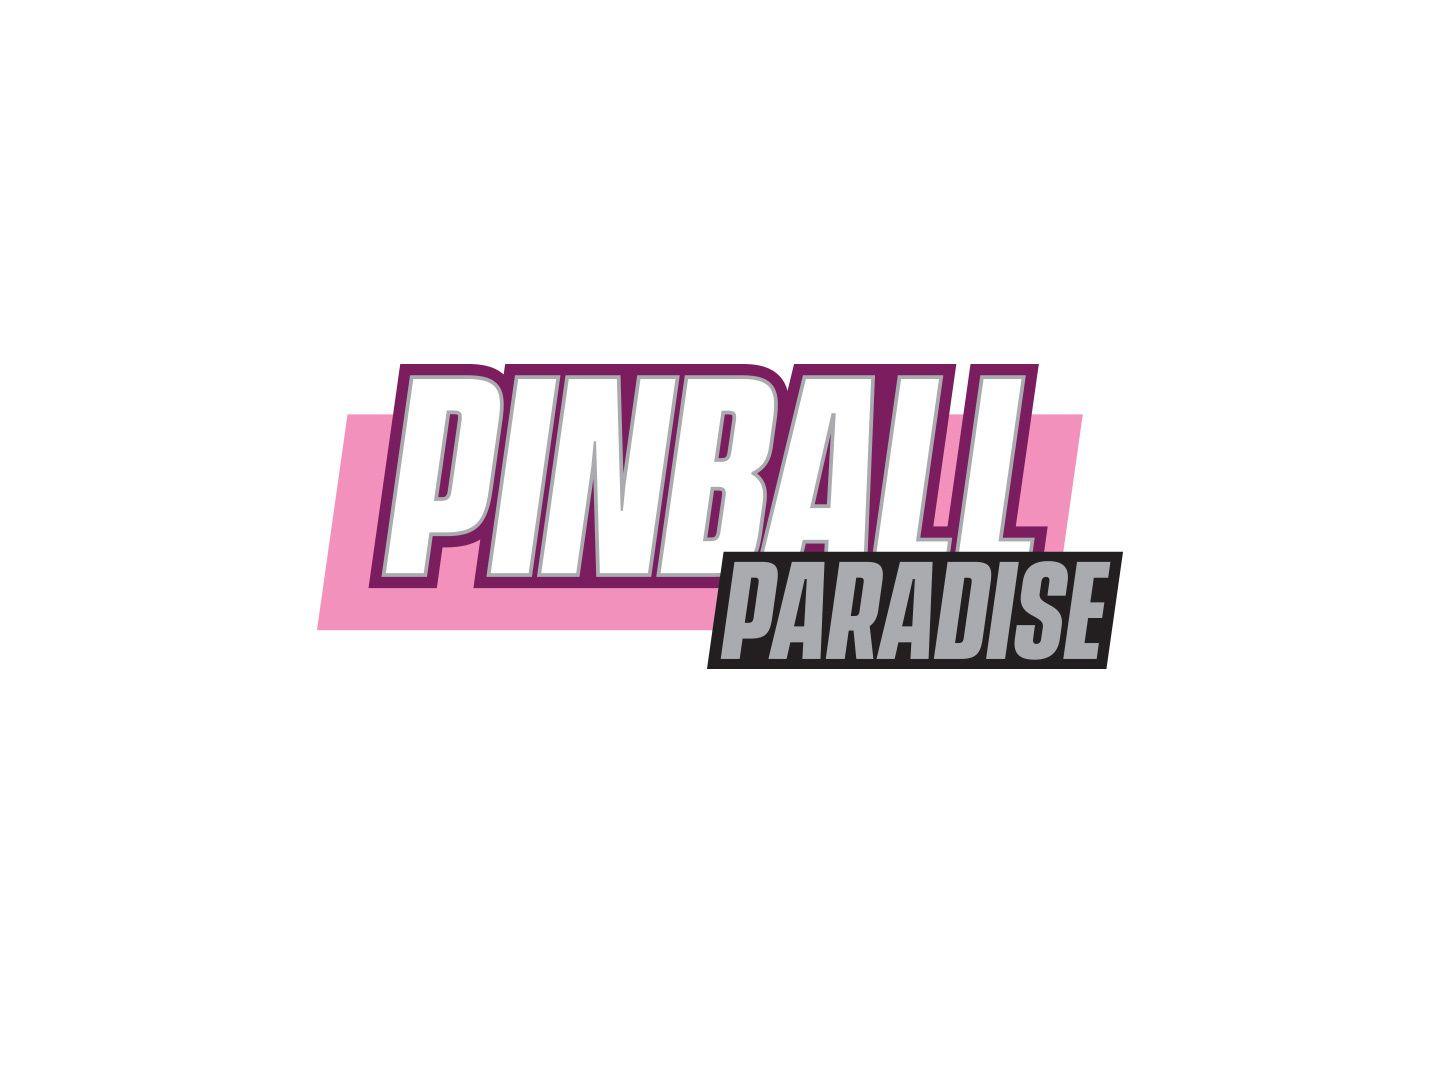 Pinball Logo - Pinball Paradise | Daily Logo Challenge: Day 50 by Urban Godlewski ...